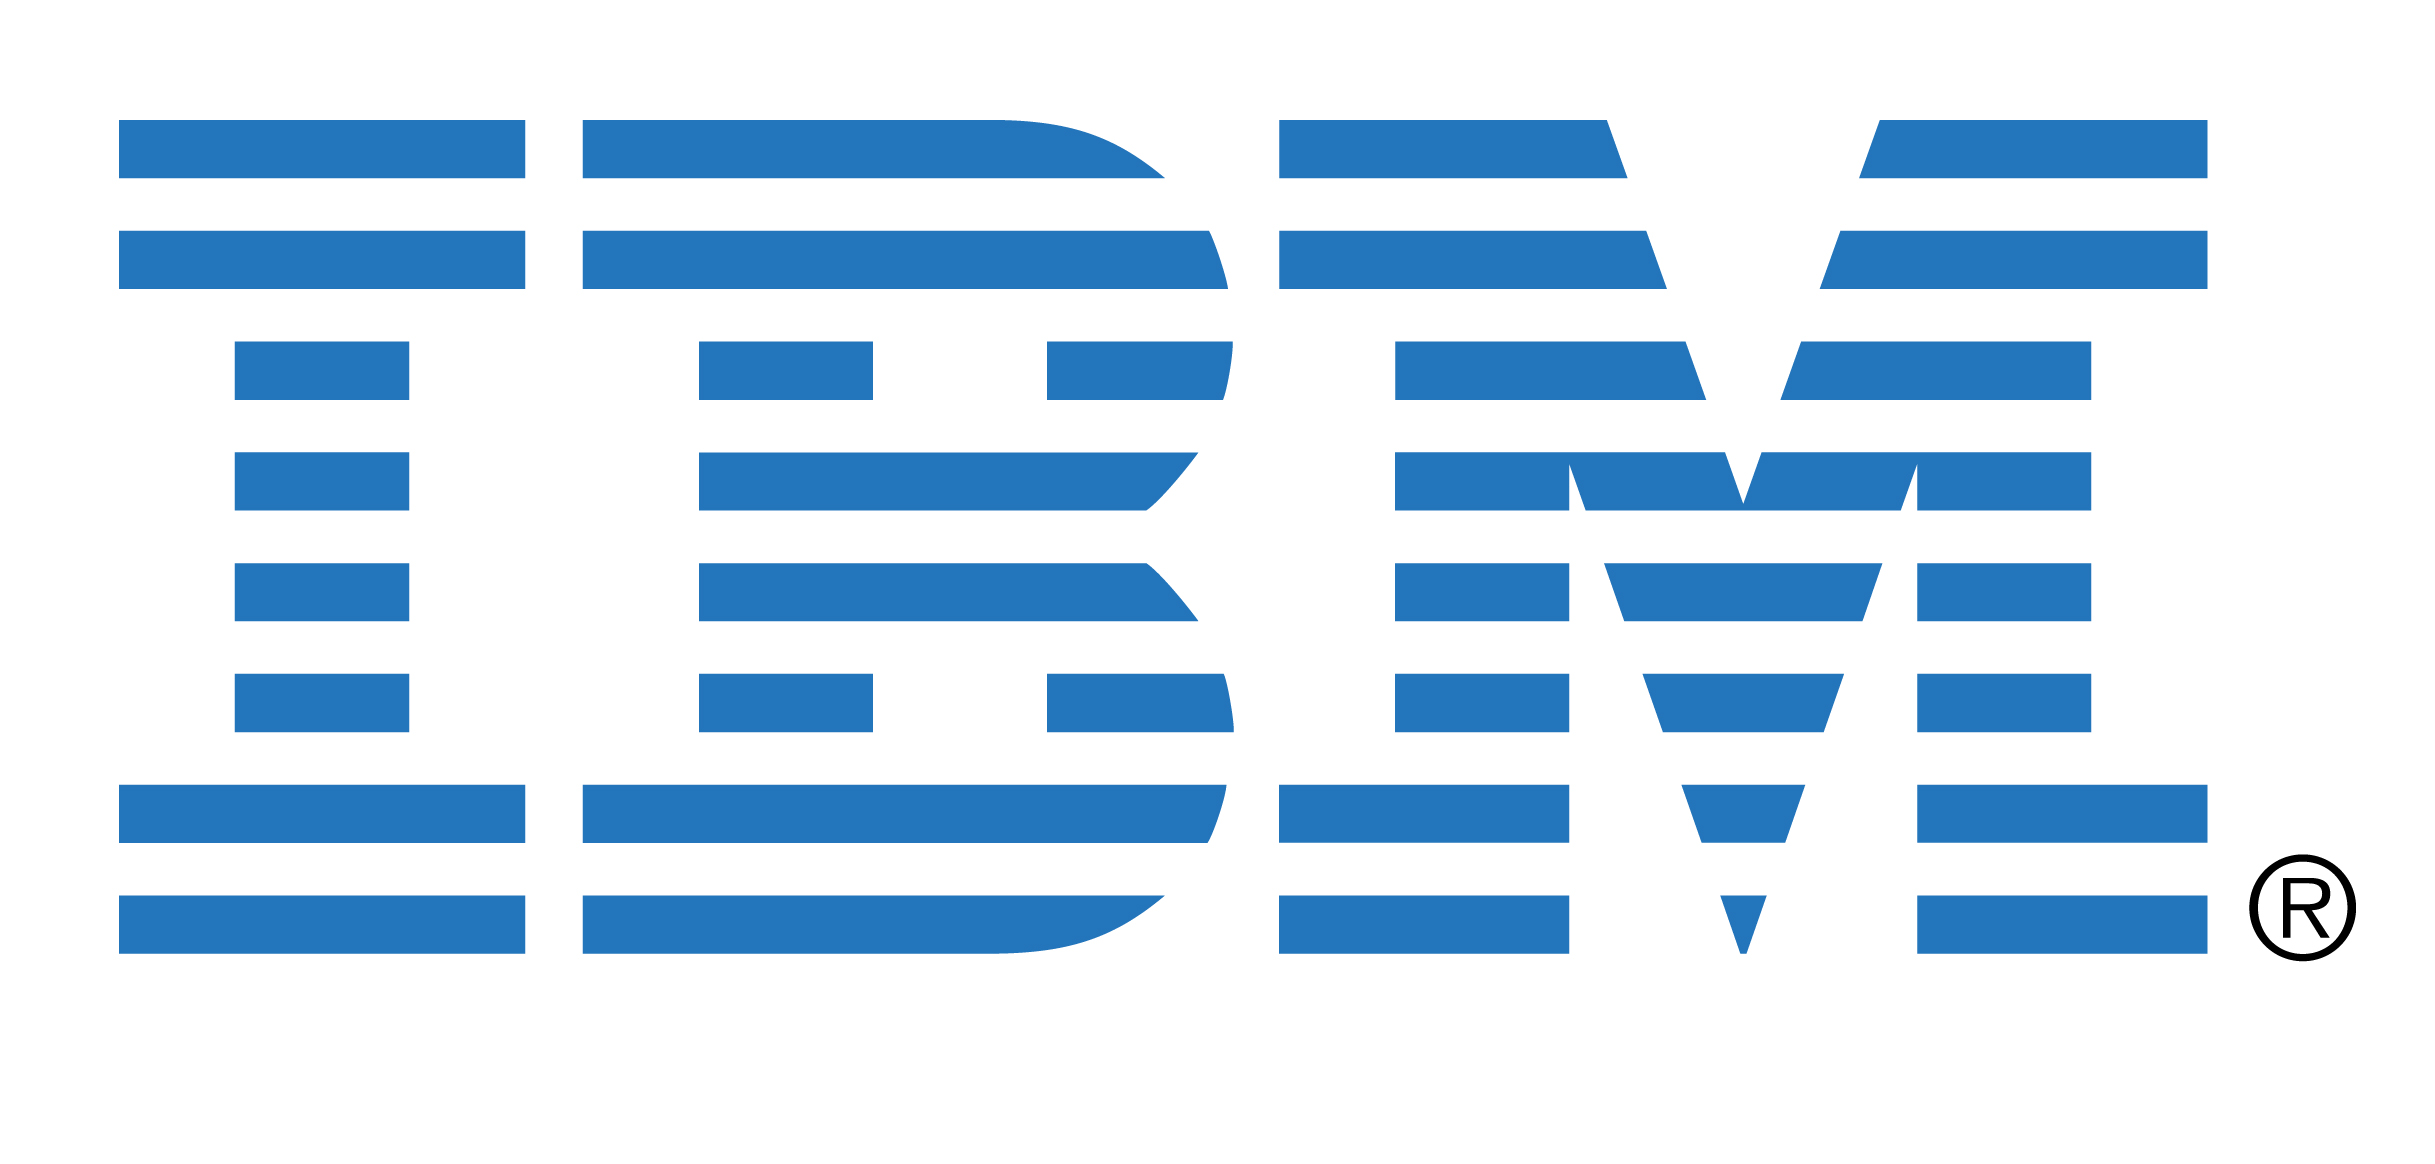 aecspain on X: "IBM Global Business Services se transforma en IBM Consulting.https://t.co/tKdJxoHCy6 https://t.co/JzslSw0tYt" / X